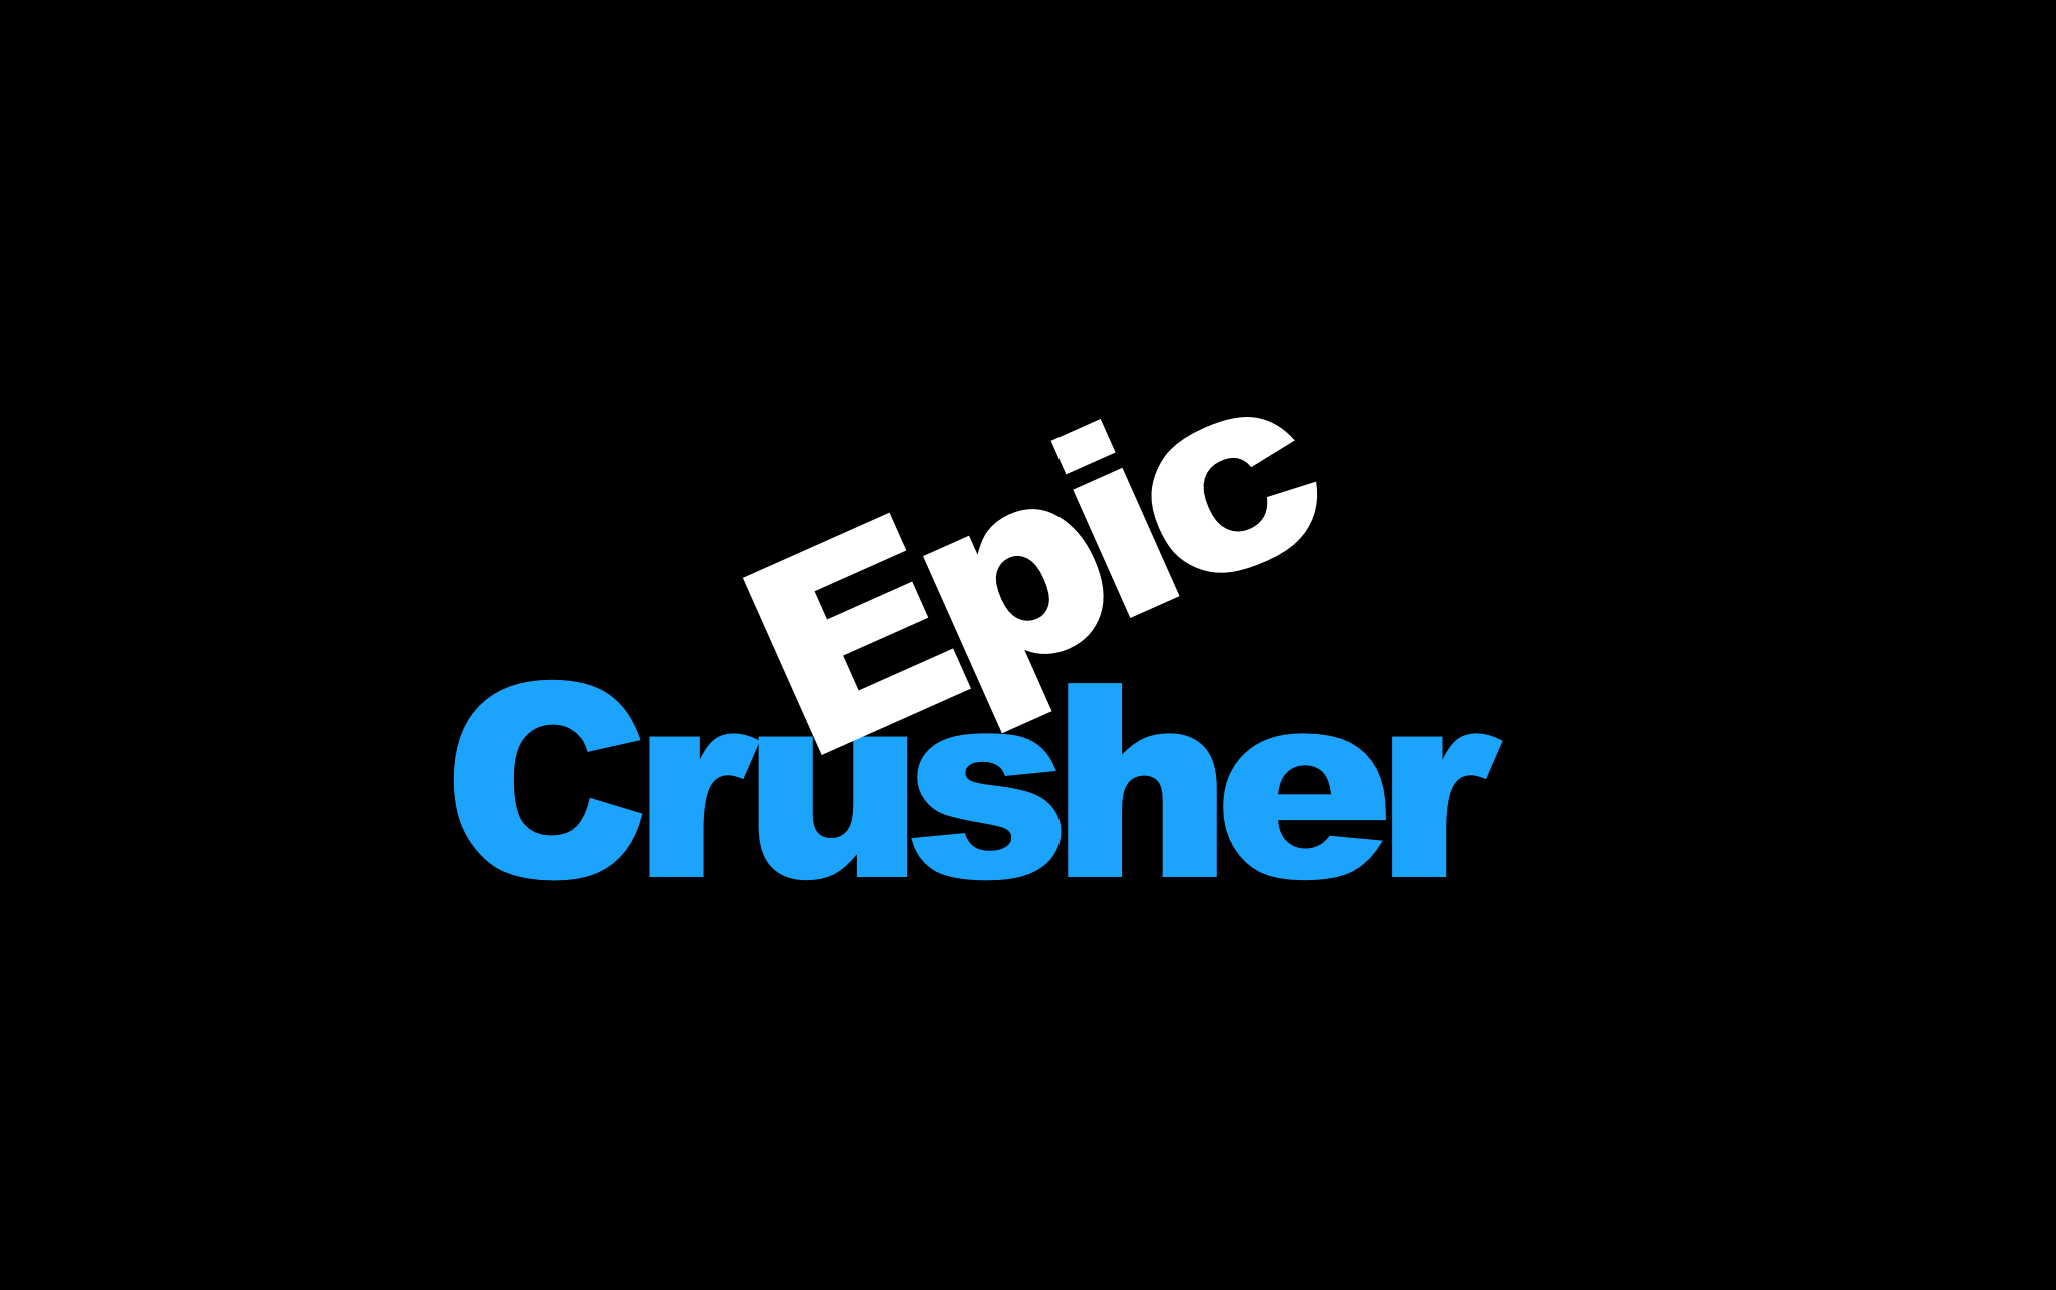 EpicCrusher on Youtube Logo